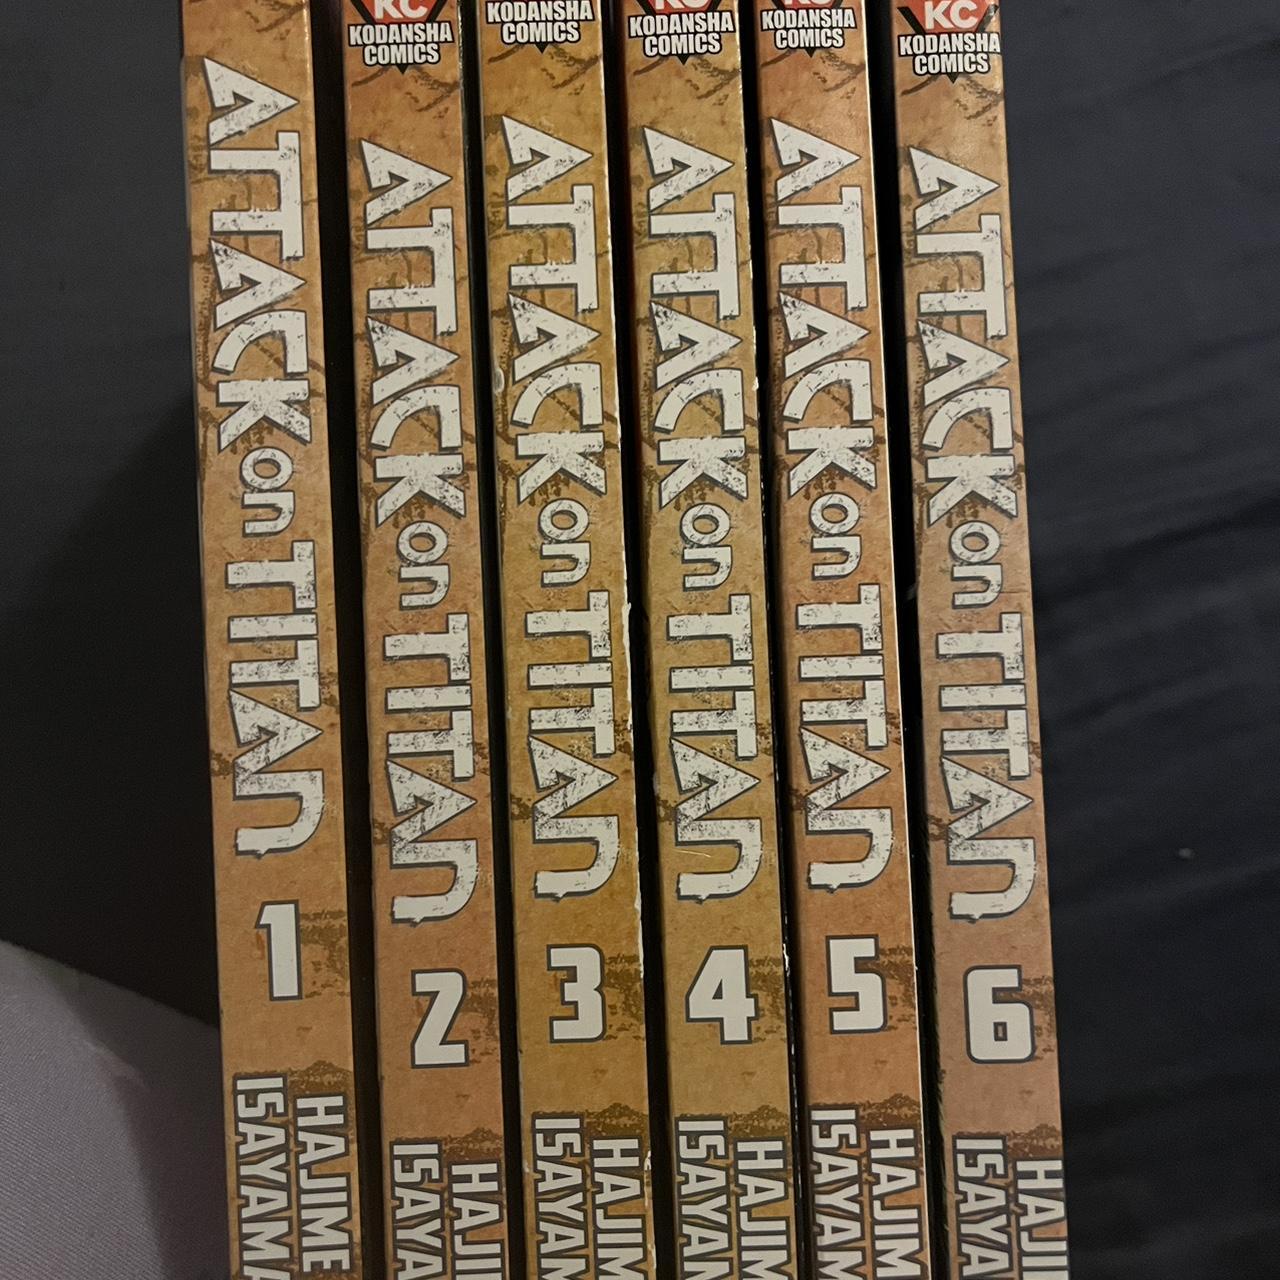 Attack on Titan Manga Volume 1